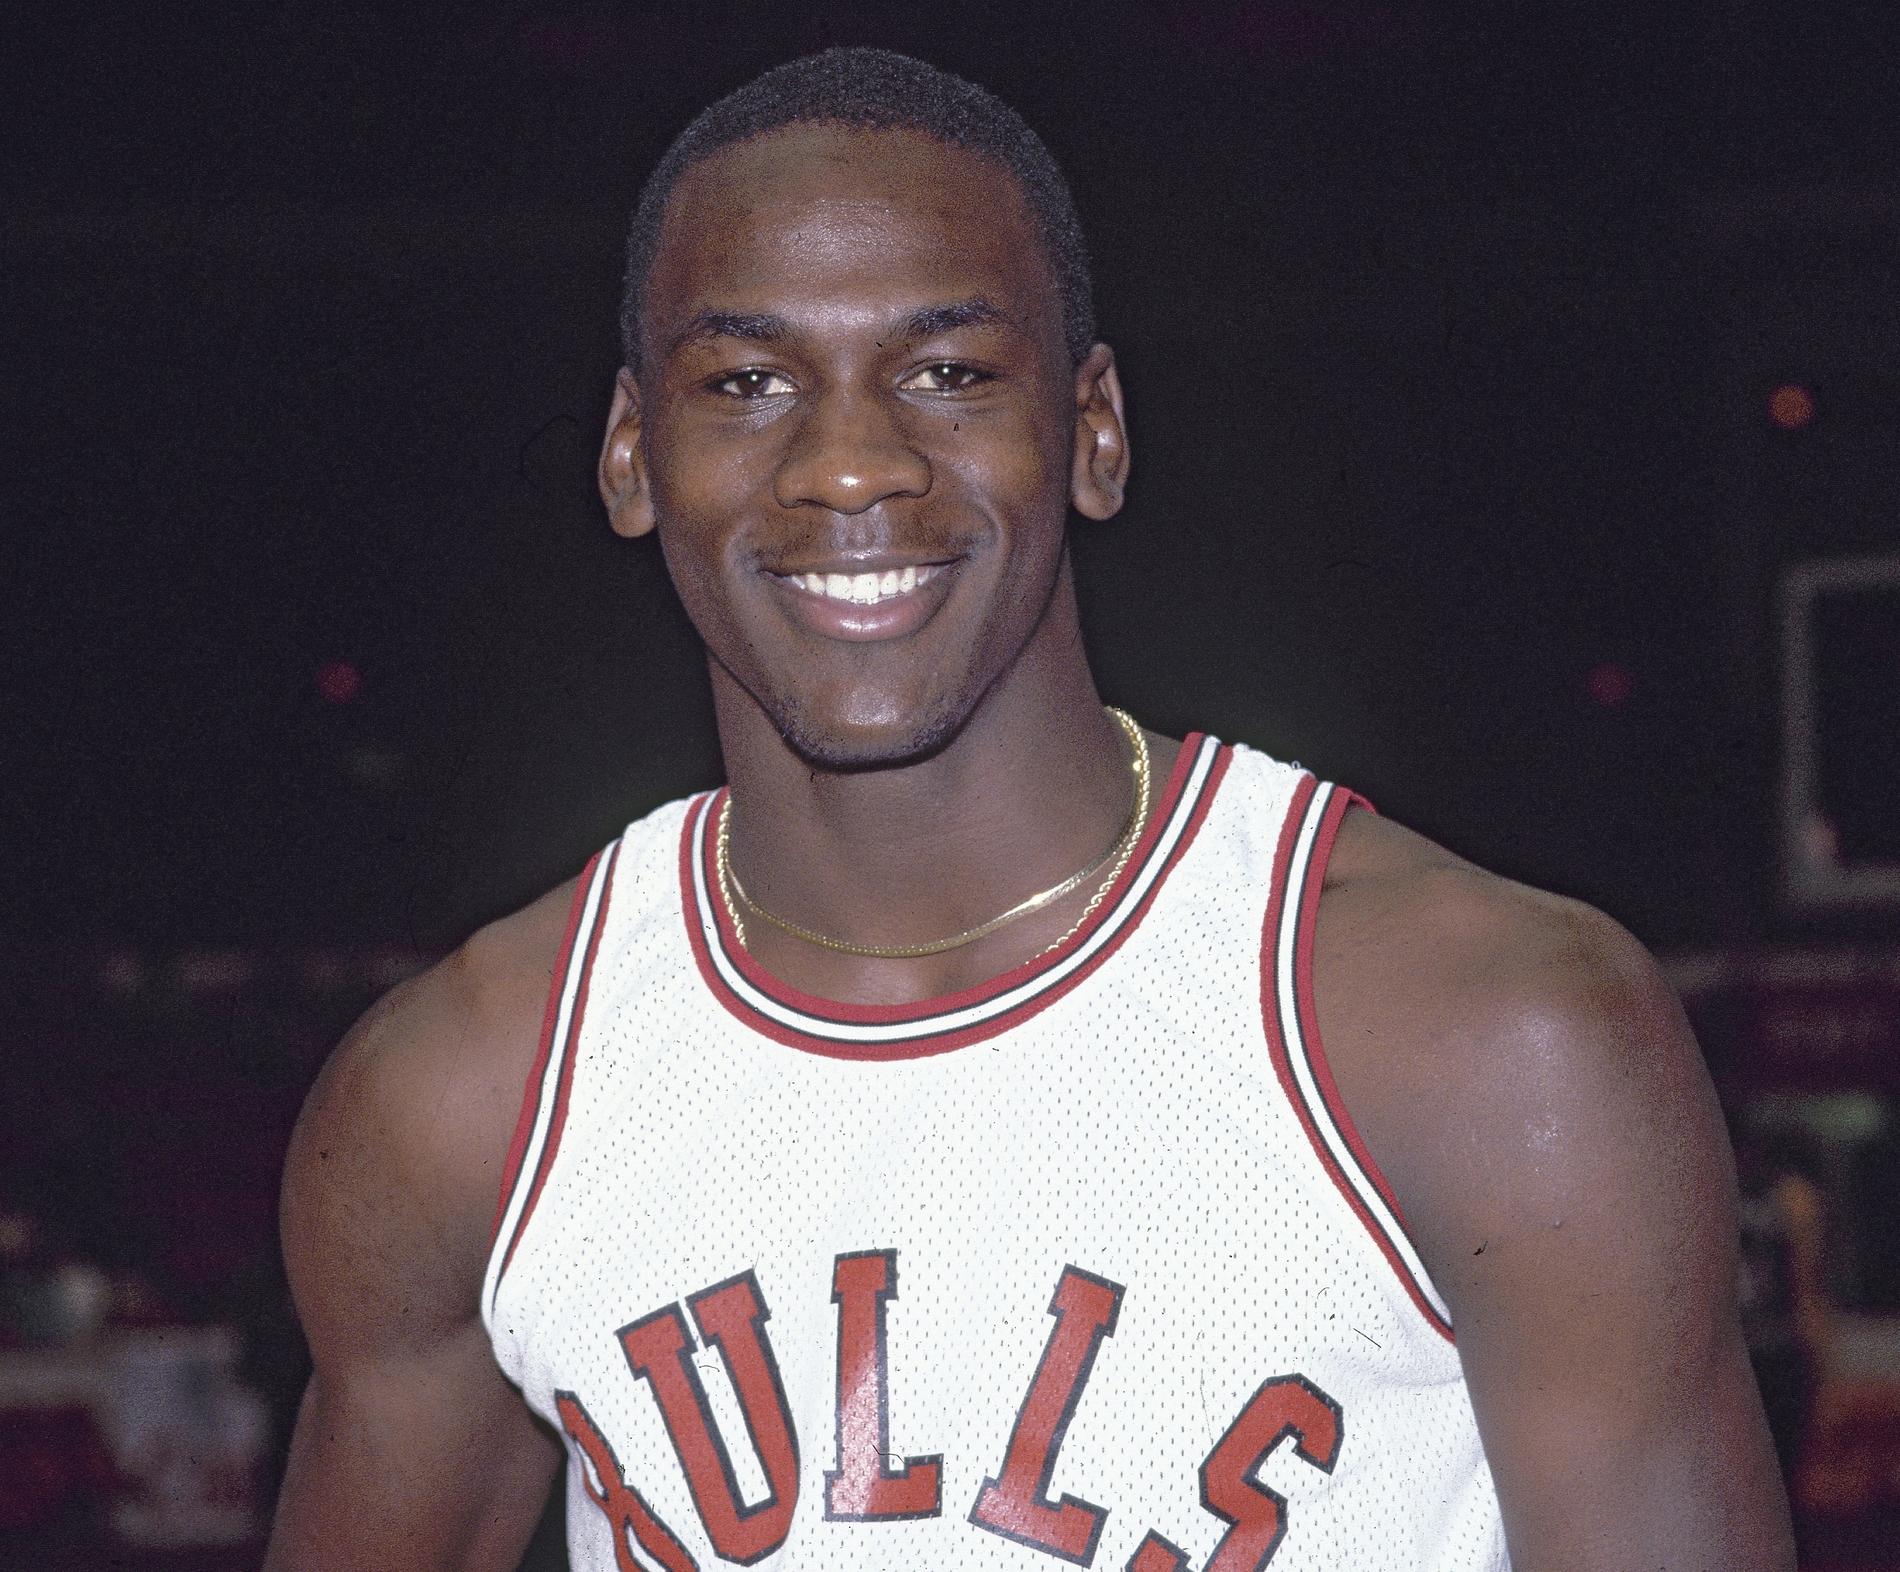 1984 – Jordans debutsäsong.